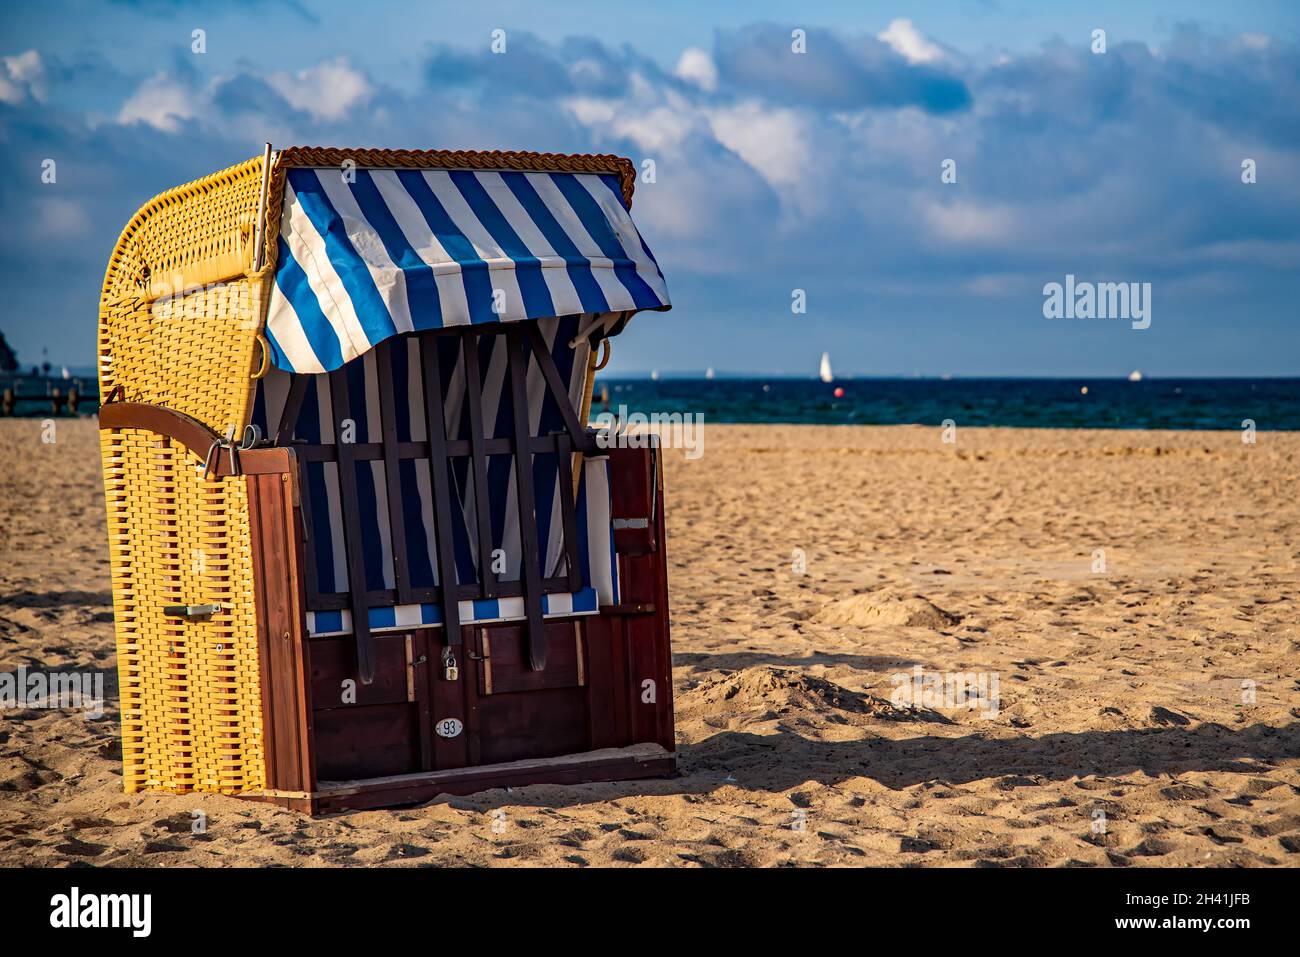 Holidays on the beach with one beach chair Stock Photo